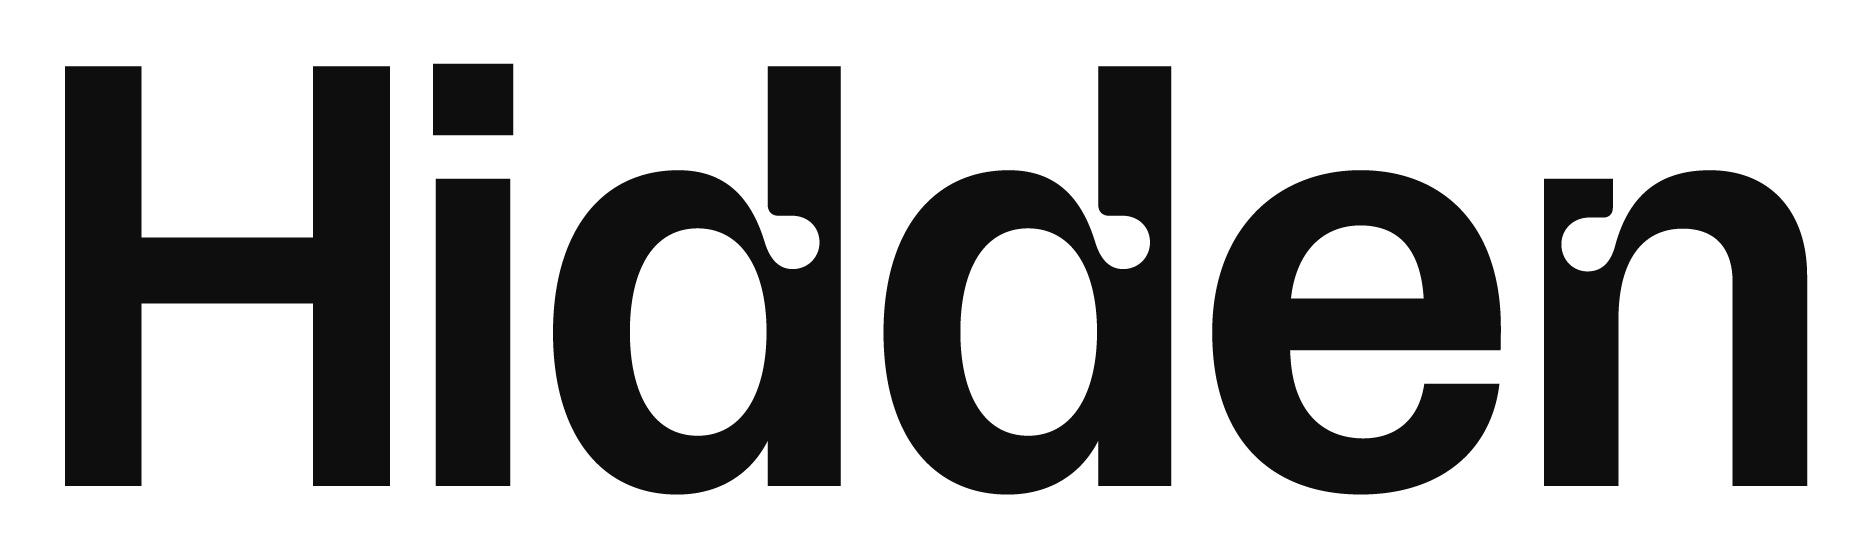 1Hidden-Logotype-Black-Space-01